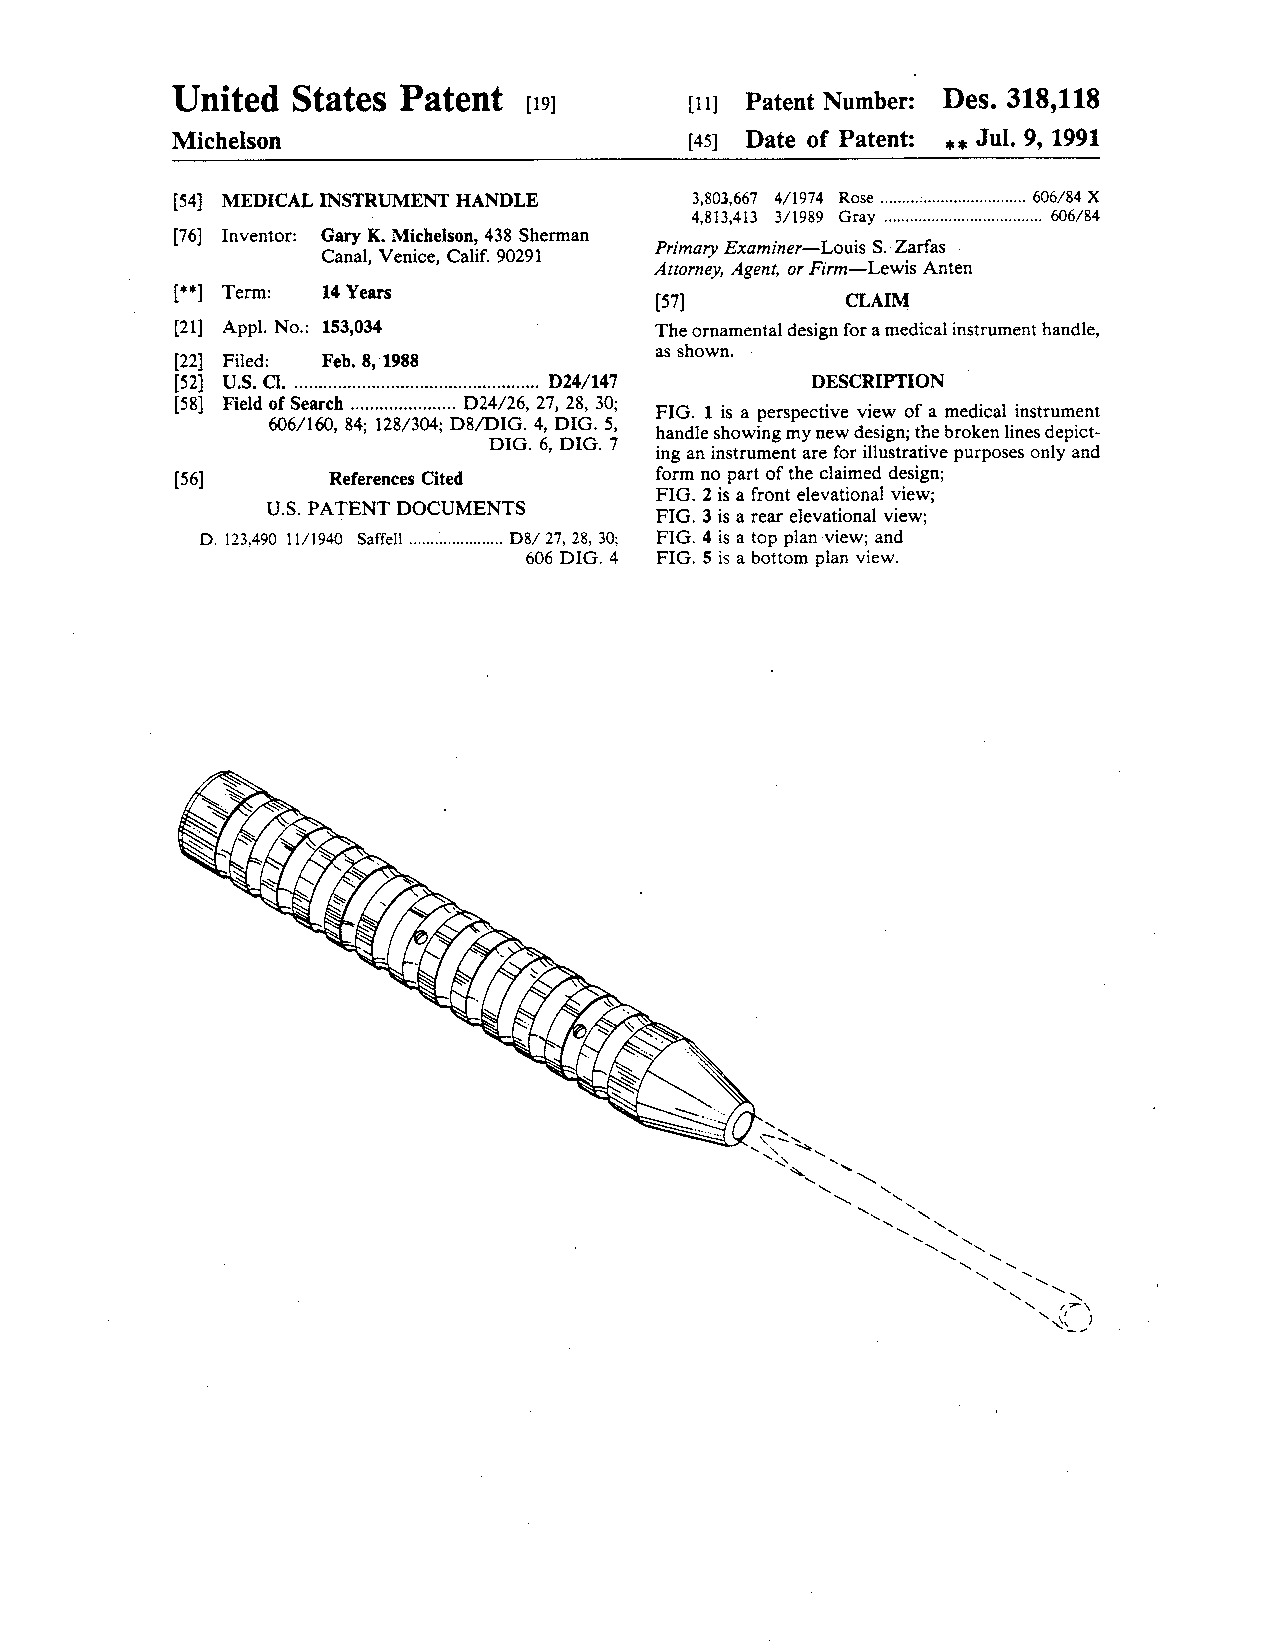 Medical instrument handle - Patent D318,118